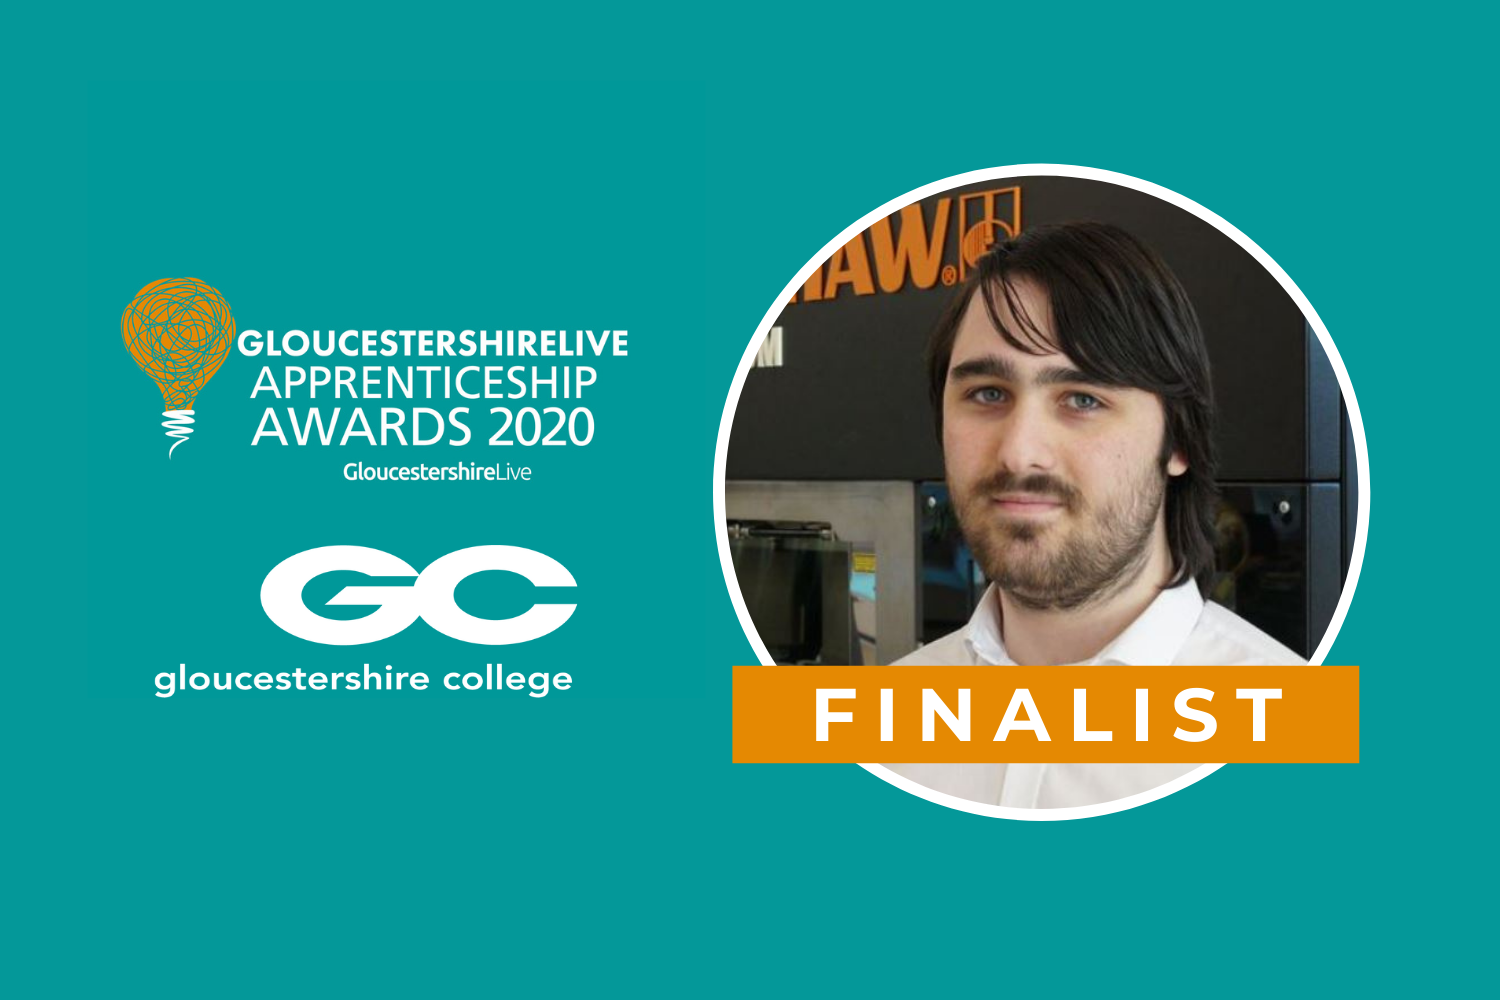 Apprentice Spotlight: Jack Chapman, GloucestershireLive Apprenticeship Awards 2020 Finalist